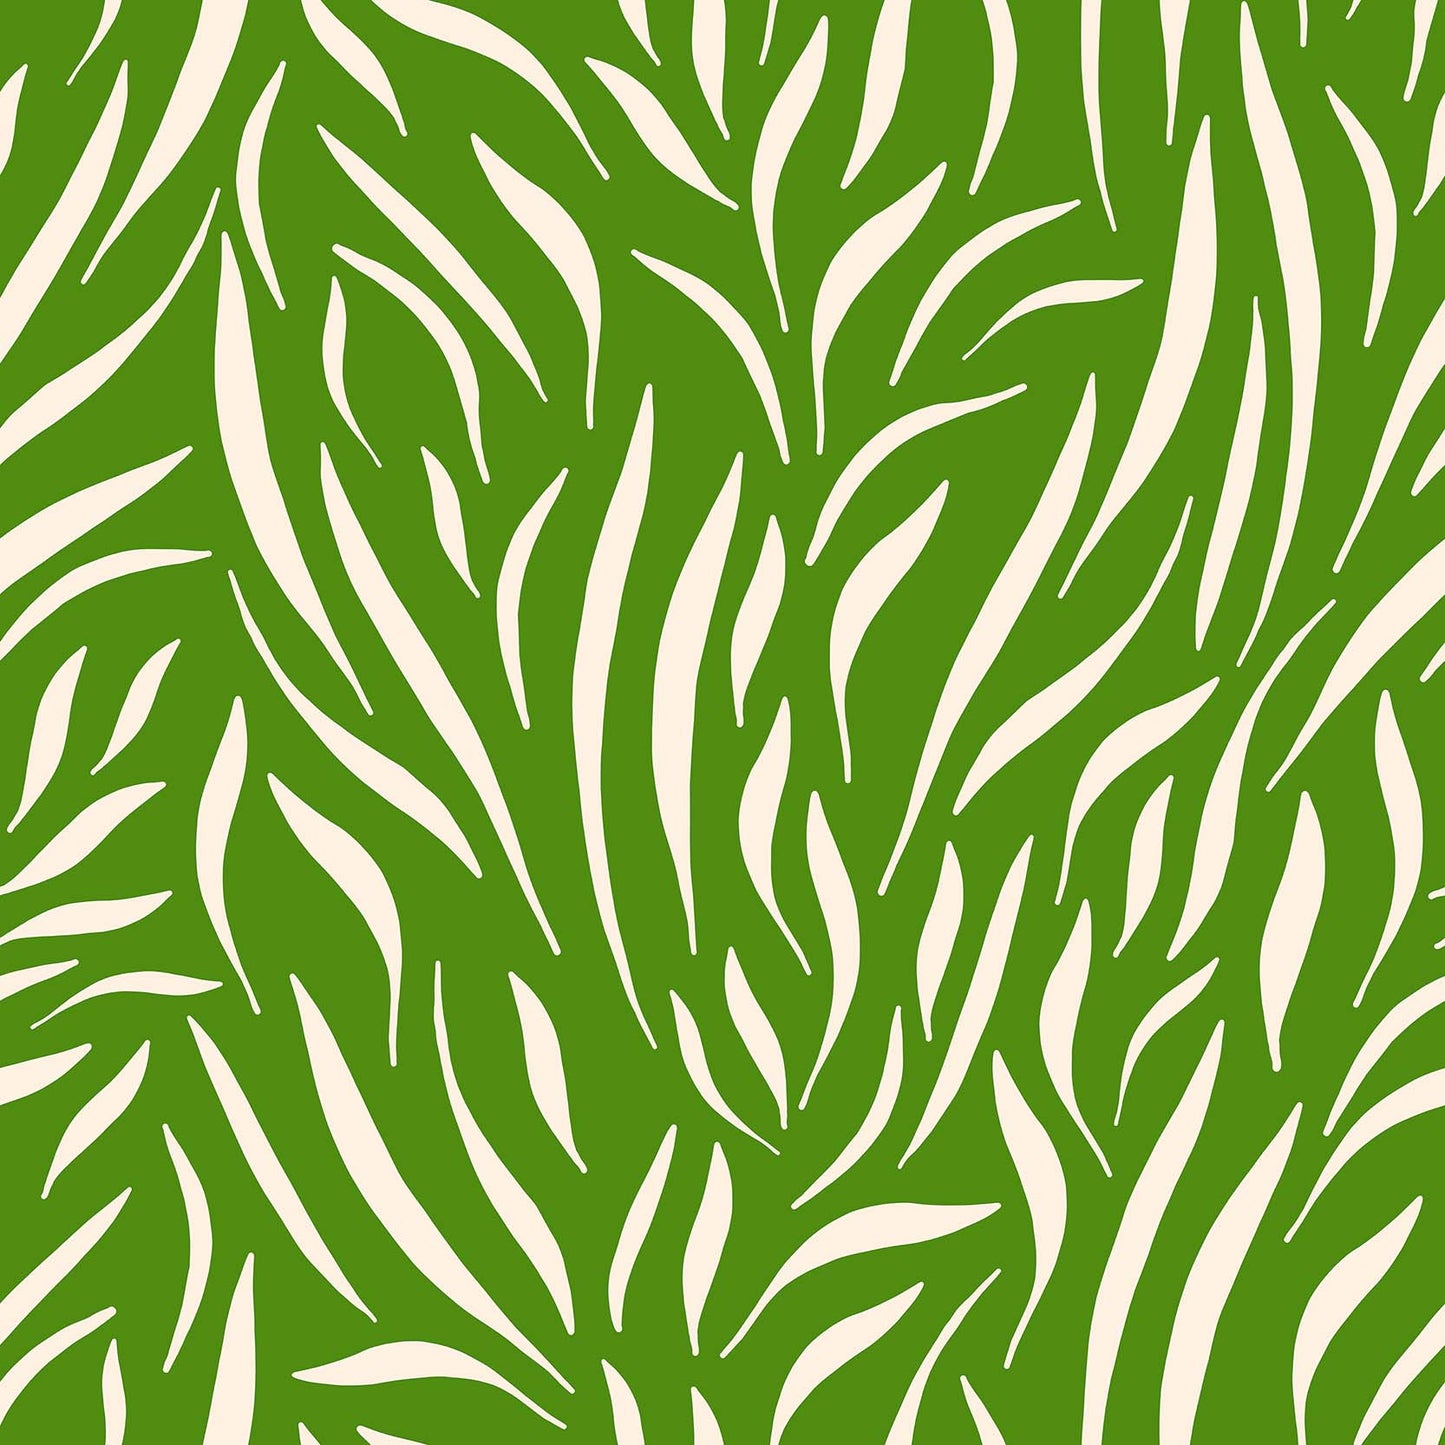 Fun green abstract pattern vinyl furniture wrap by restowrap.com